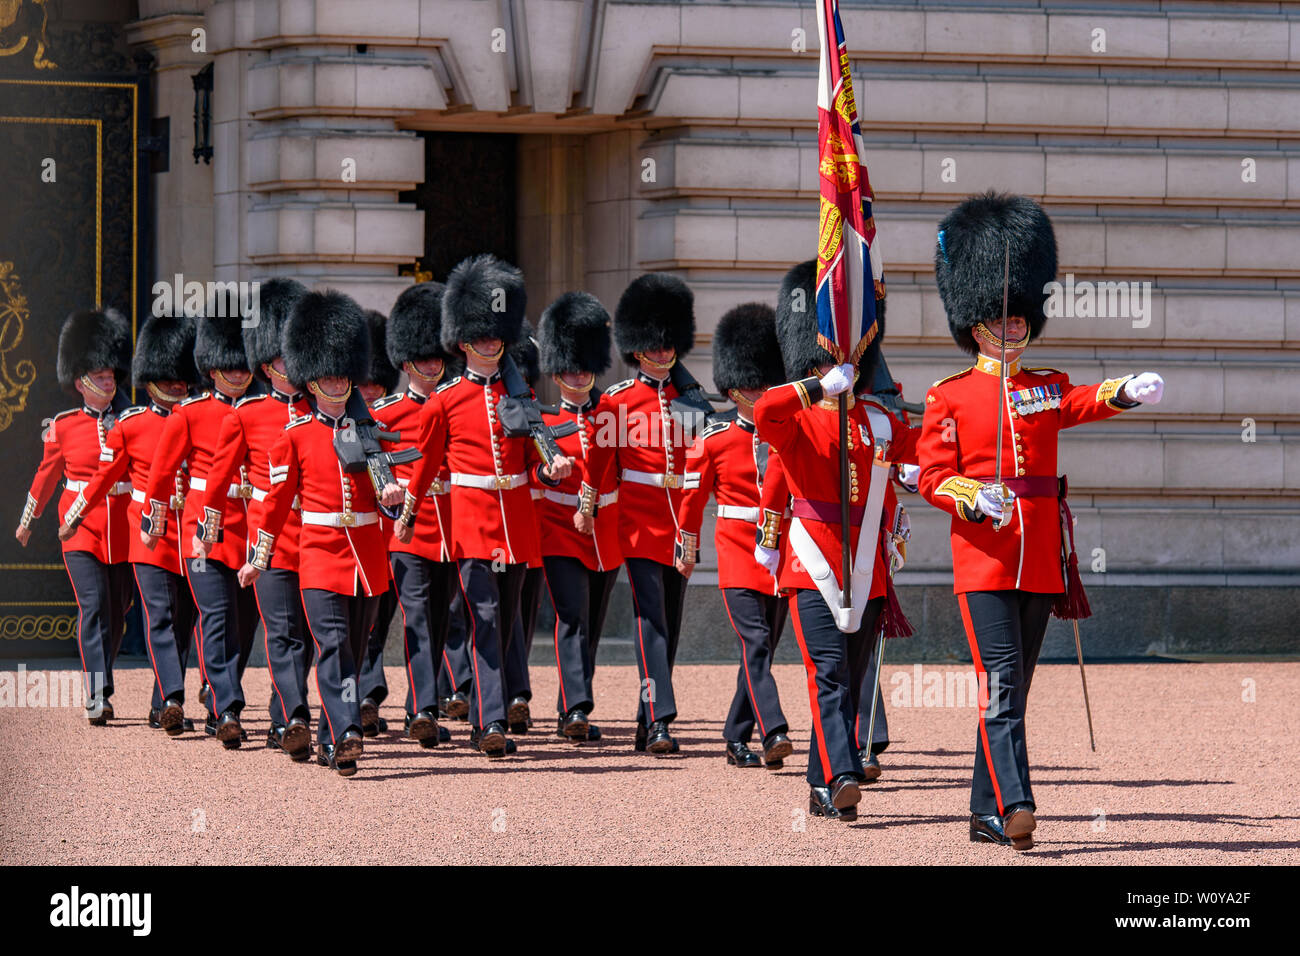 https://c8.alamy.com/comp/W0YA2F/ceremony-of-changing-the-guard-on-the-forecourt-of-buckingham-palace-london-united-kingdom-W0YA2F.jpg